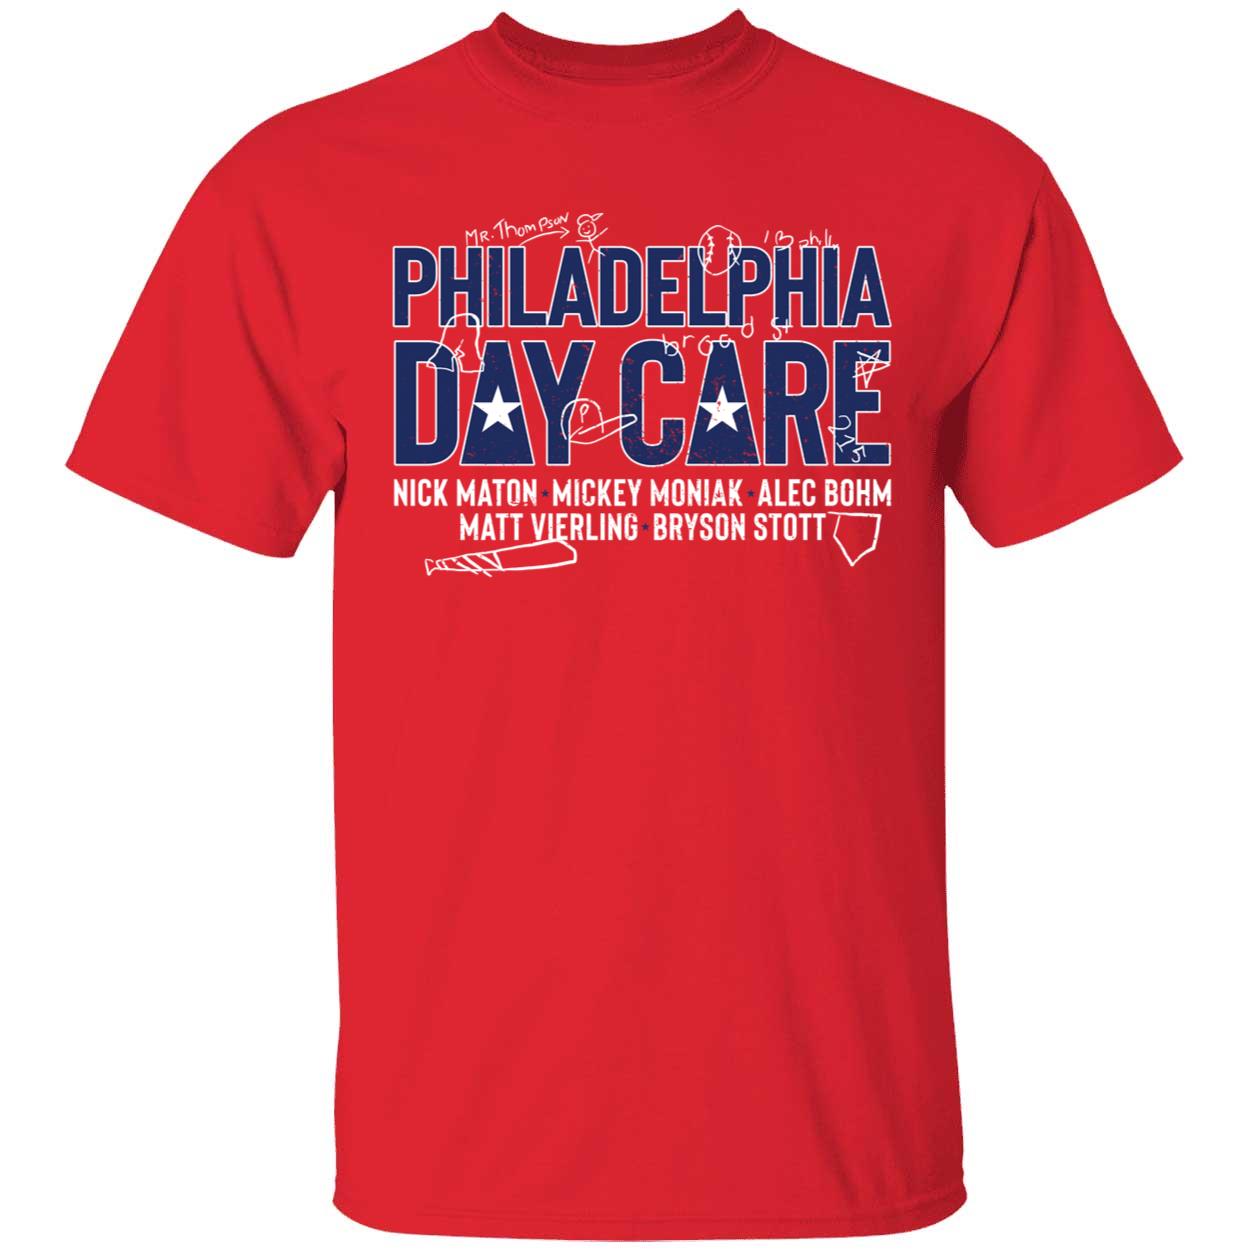 Philadelphia Day Care Alec Bohm Matt Vierling Bryson Stott Shirt